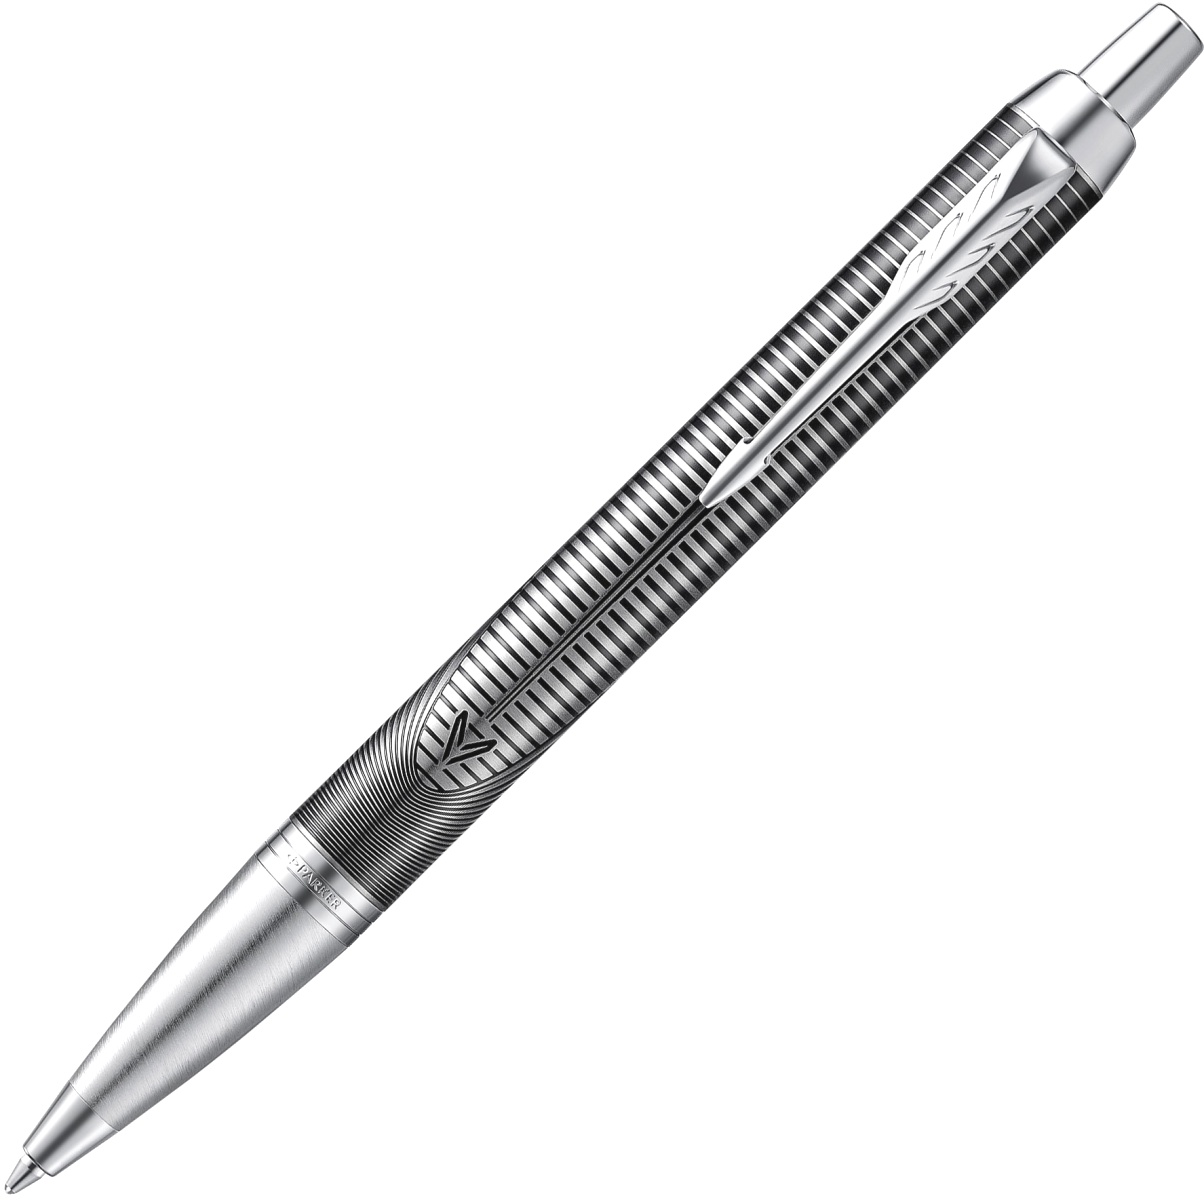  Ручка шариковая Parker IM Premium 2019 SE K325, Metallic Pursuit